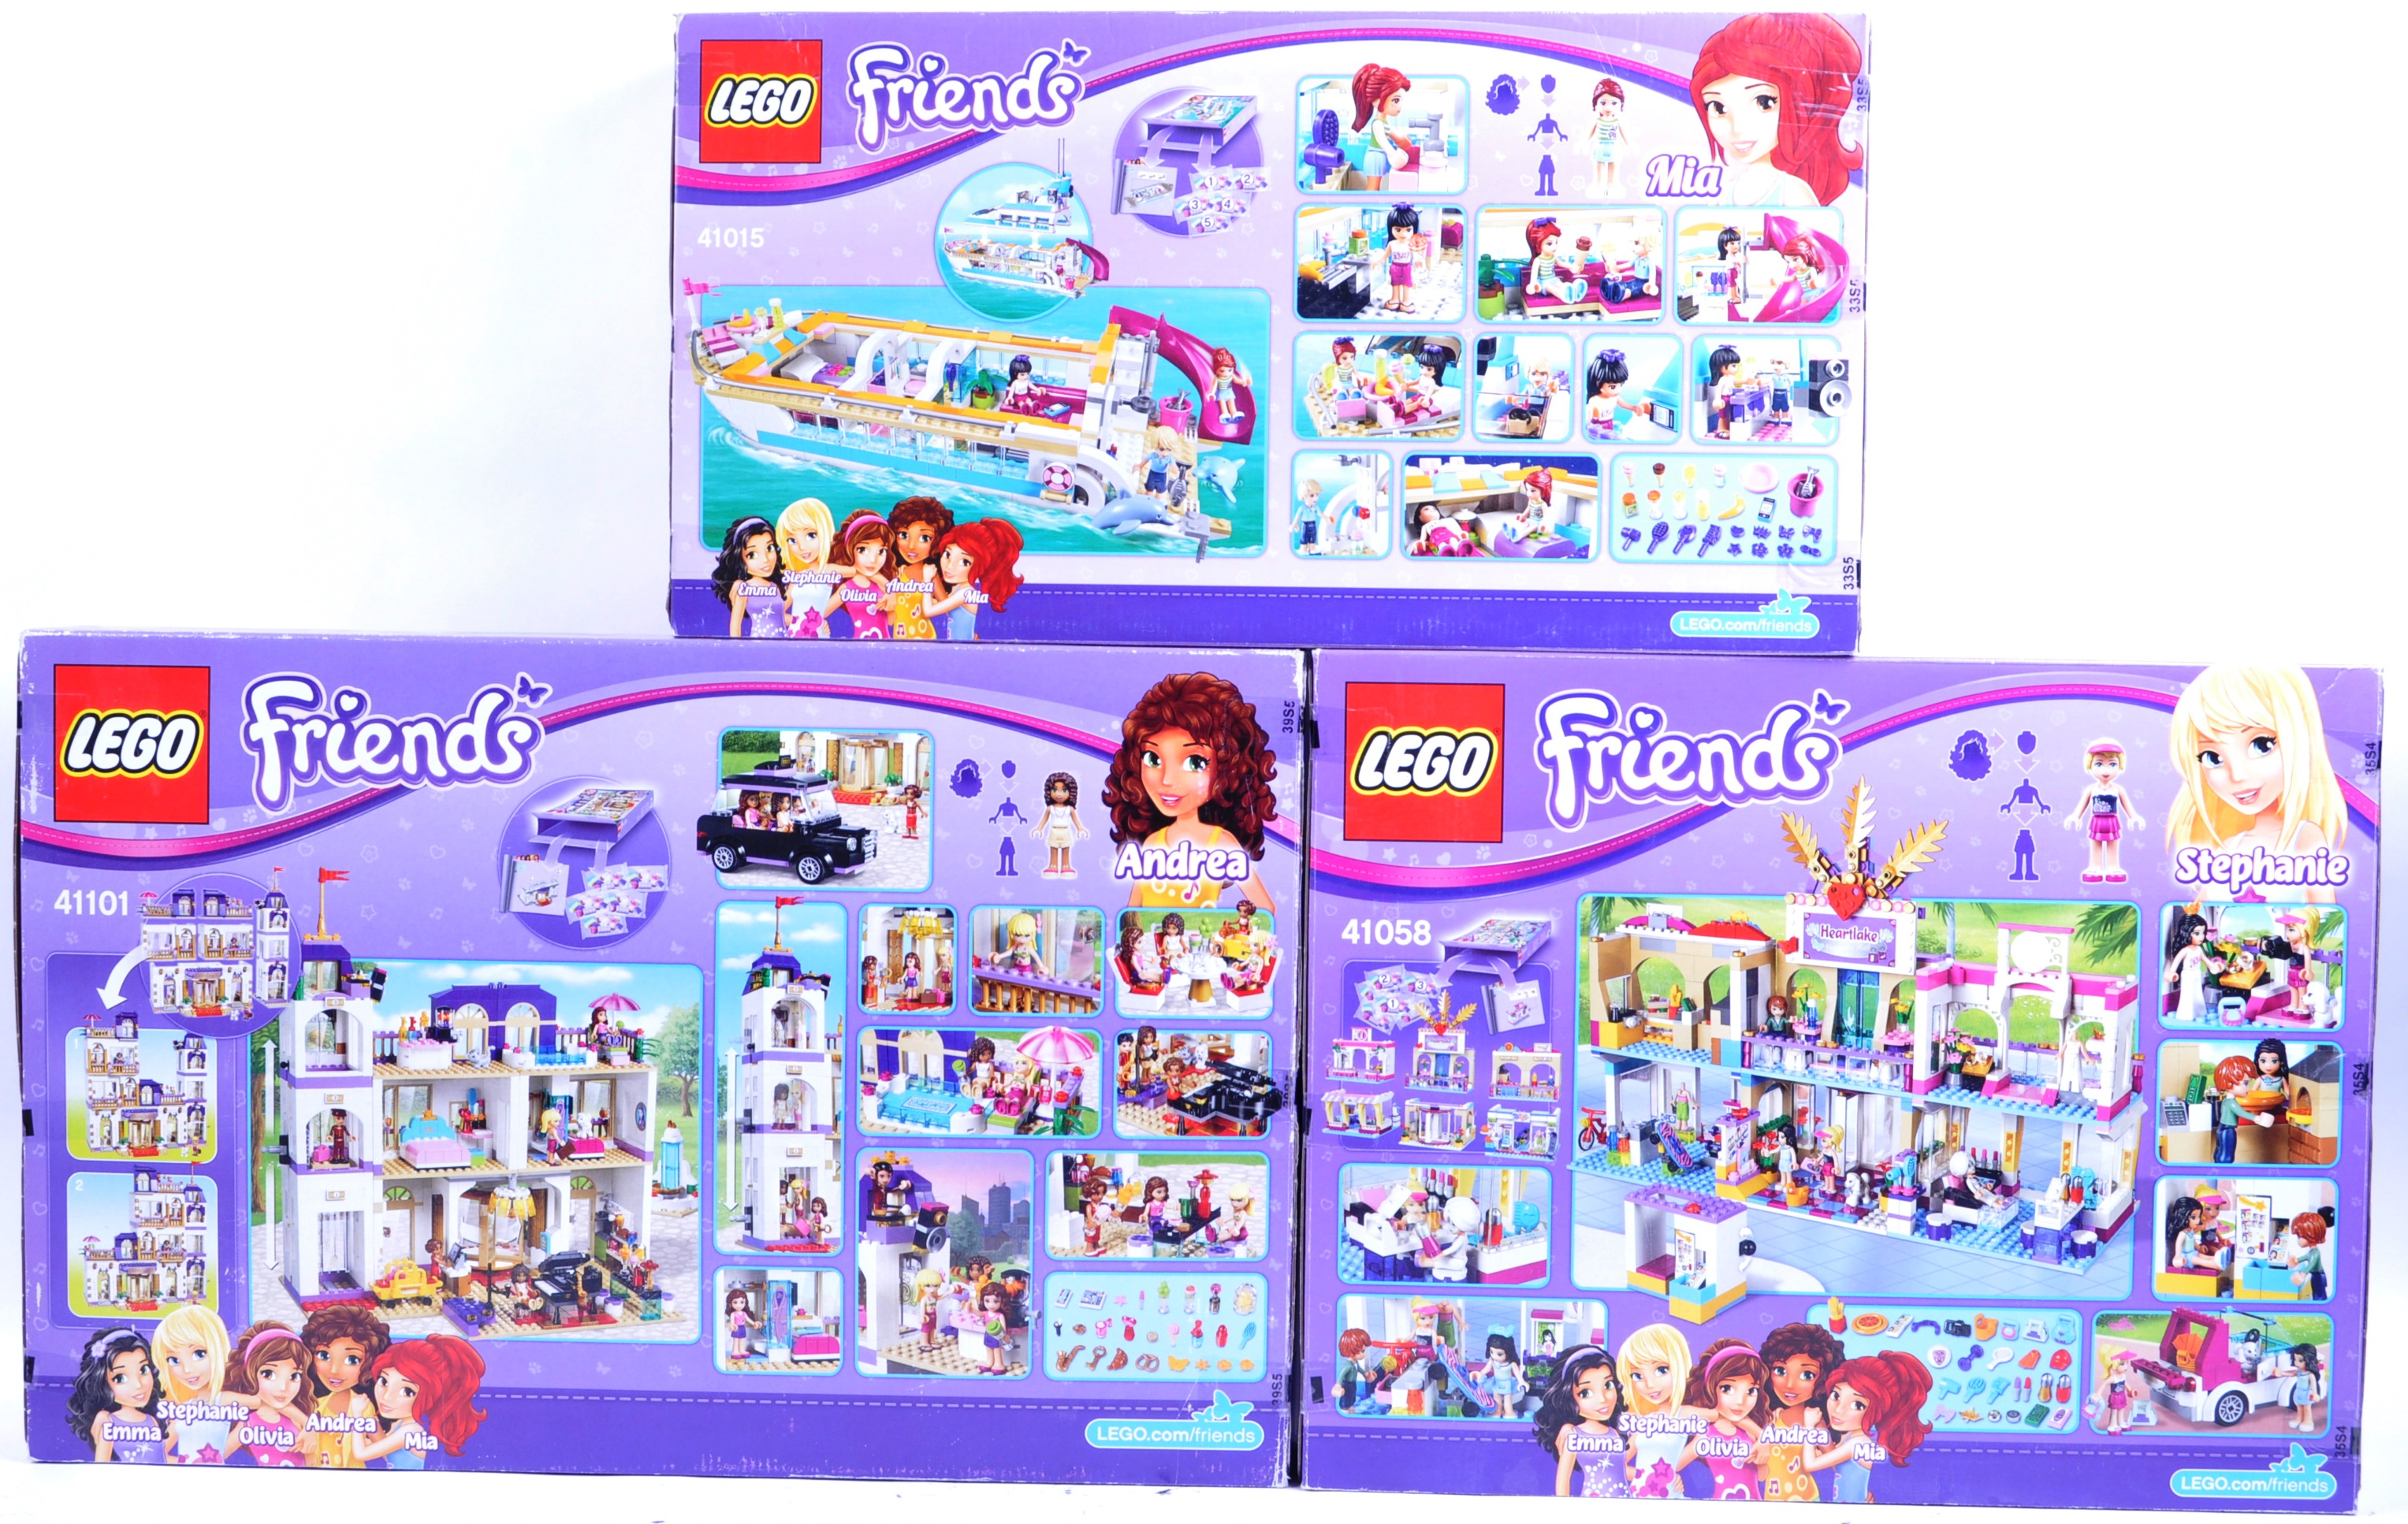 LEGO SETS - LEGO FRIENDS - 41015 / 41058 / 41101 - Image 5 of 6